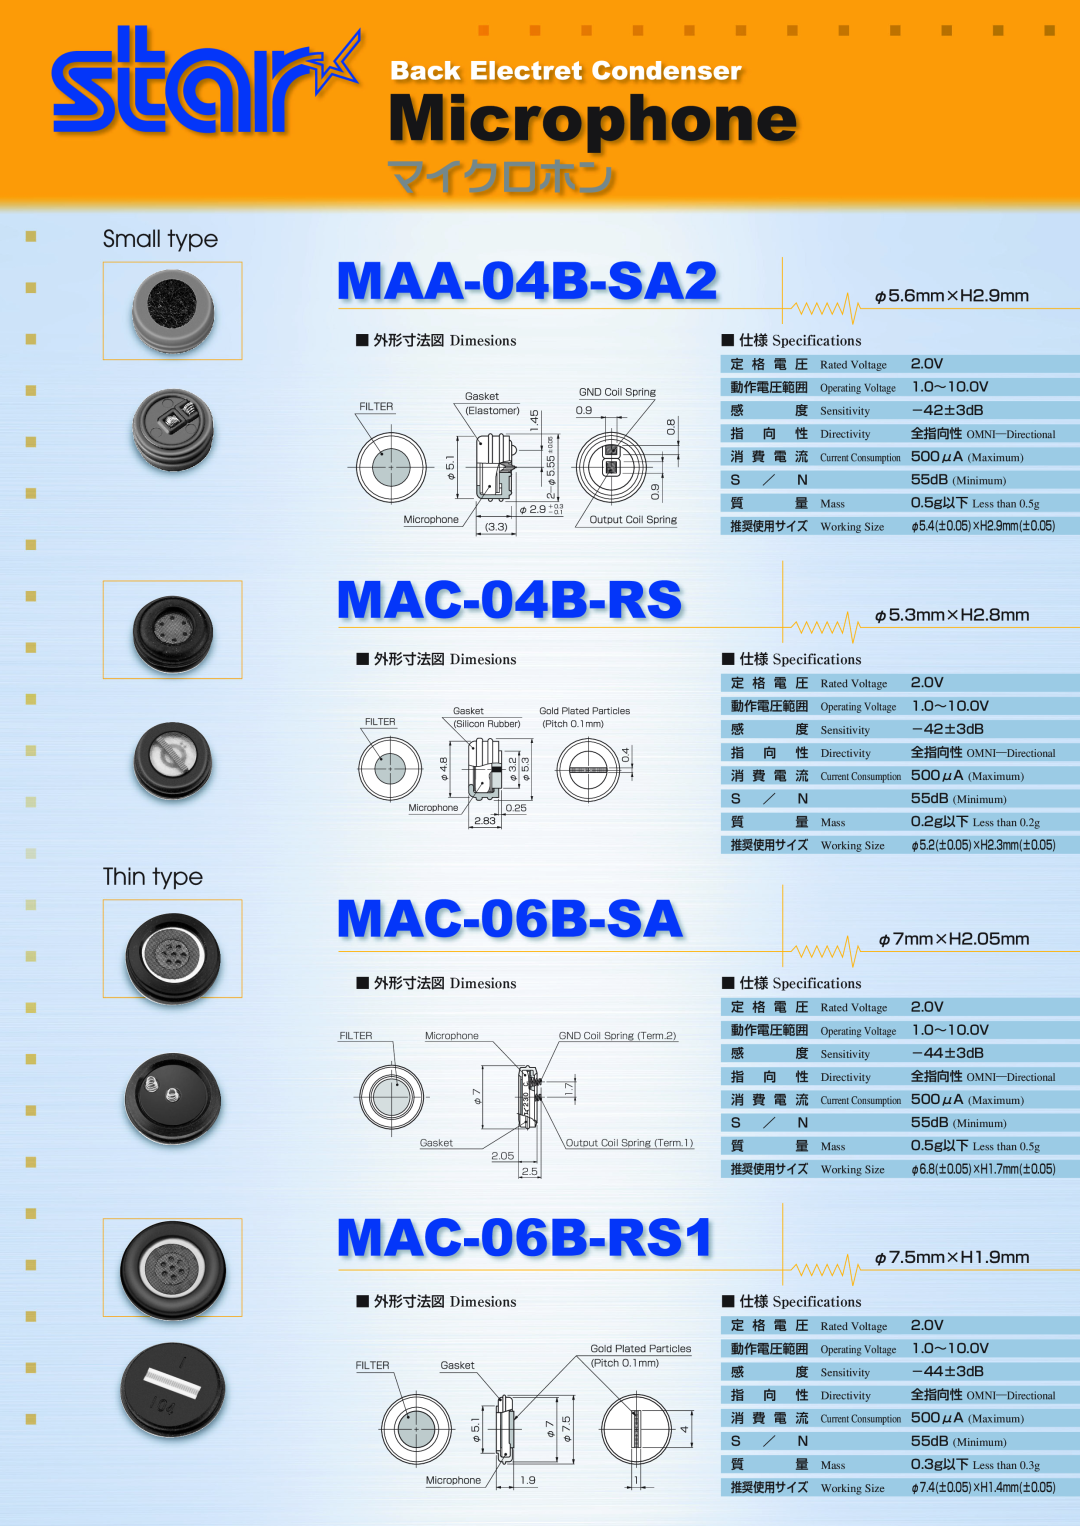 Star Micronics MAC-06B-RS1, MAC-06B-SA manual φ5.6mm×H2.9mm, φ5.3mm×H2.8mm, φ7mm×H2.05mm, φ7.5mm×H1.9mm, 外形寸法図 Dimesions 